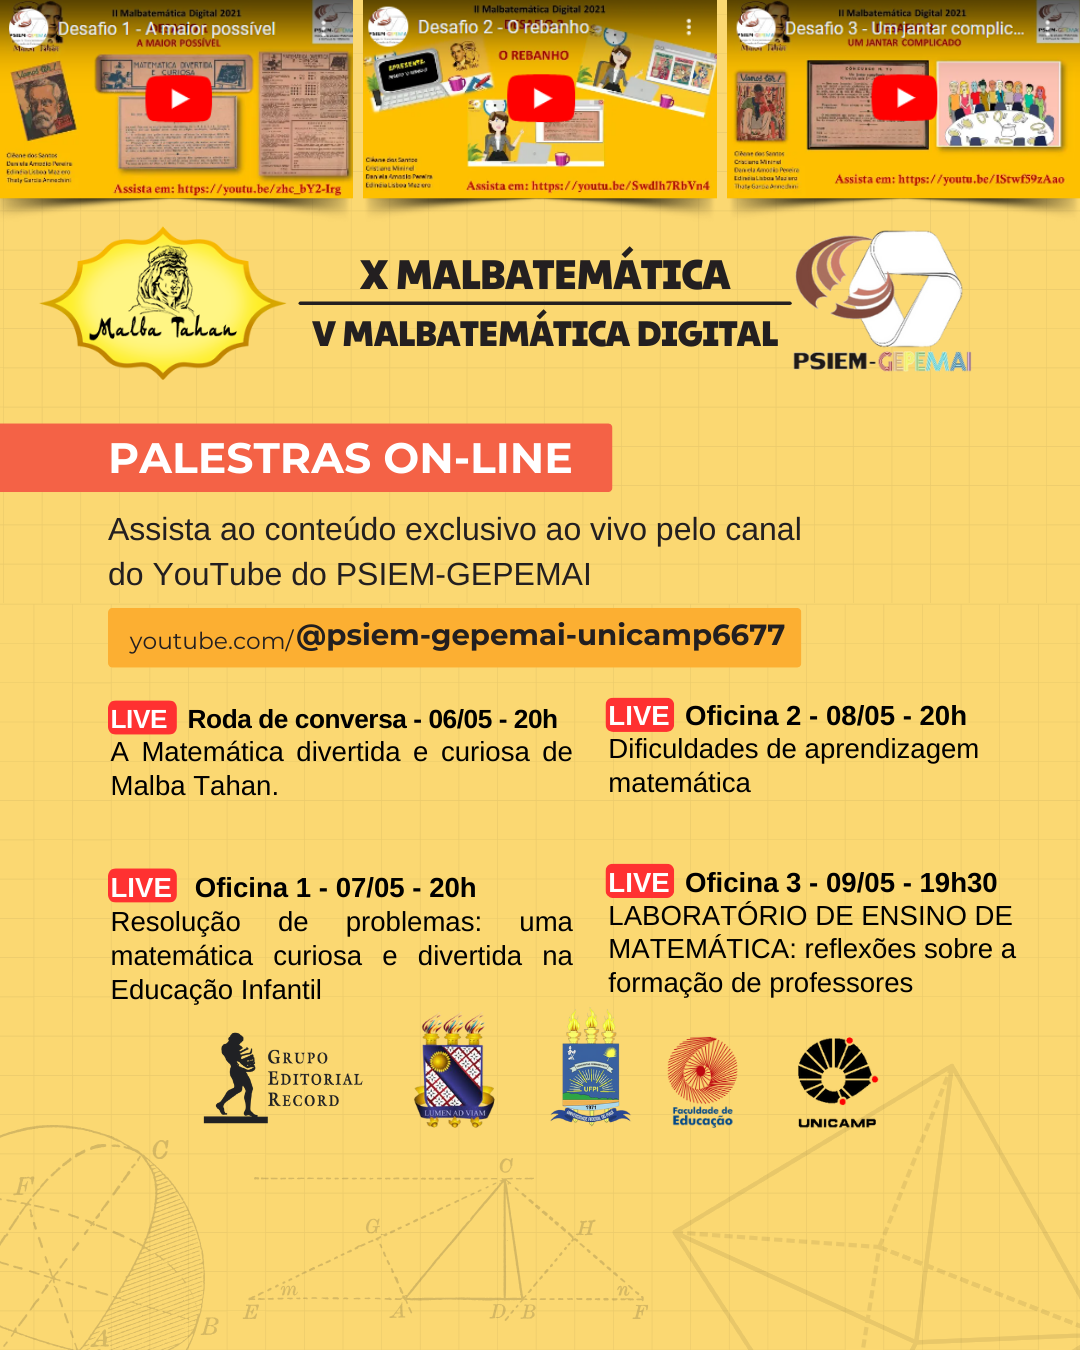 V Malbatemática Digital confira as palestras online, img amarela com thumbnails de vídeos do youtube